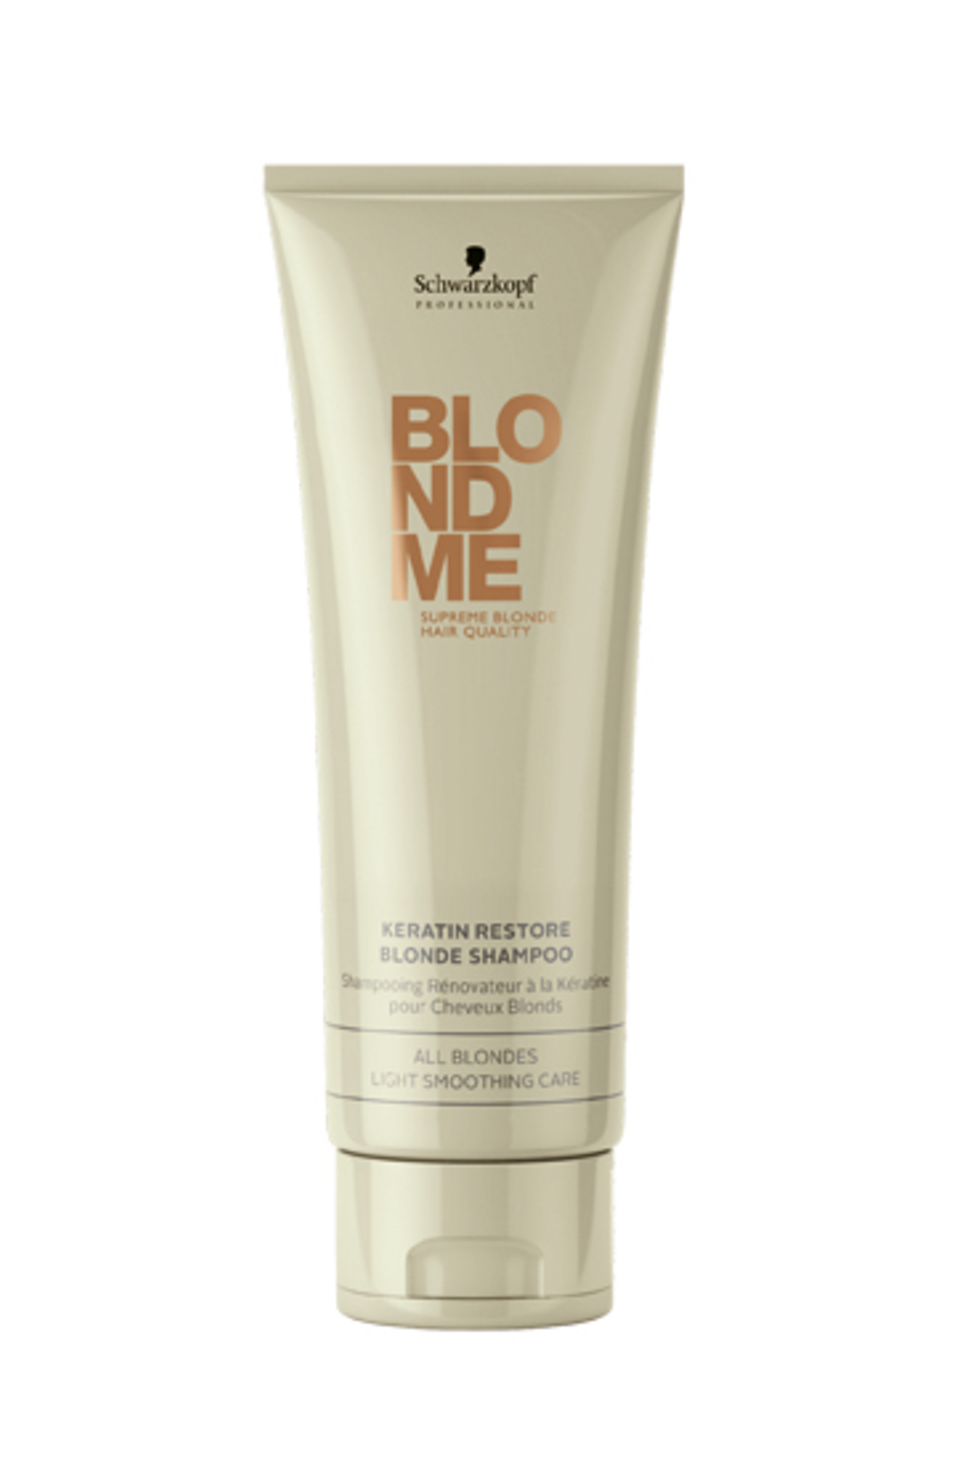 BLONDME Keratin Restore Blonde Shampoo